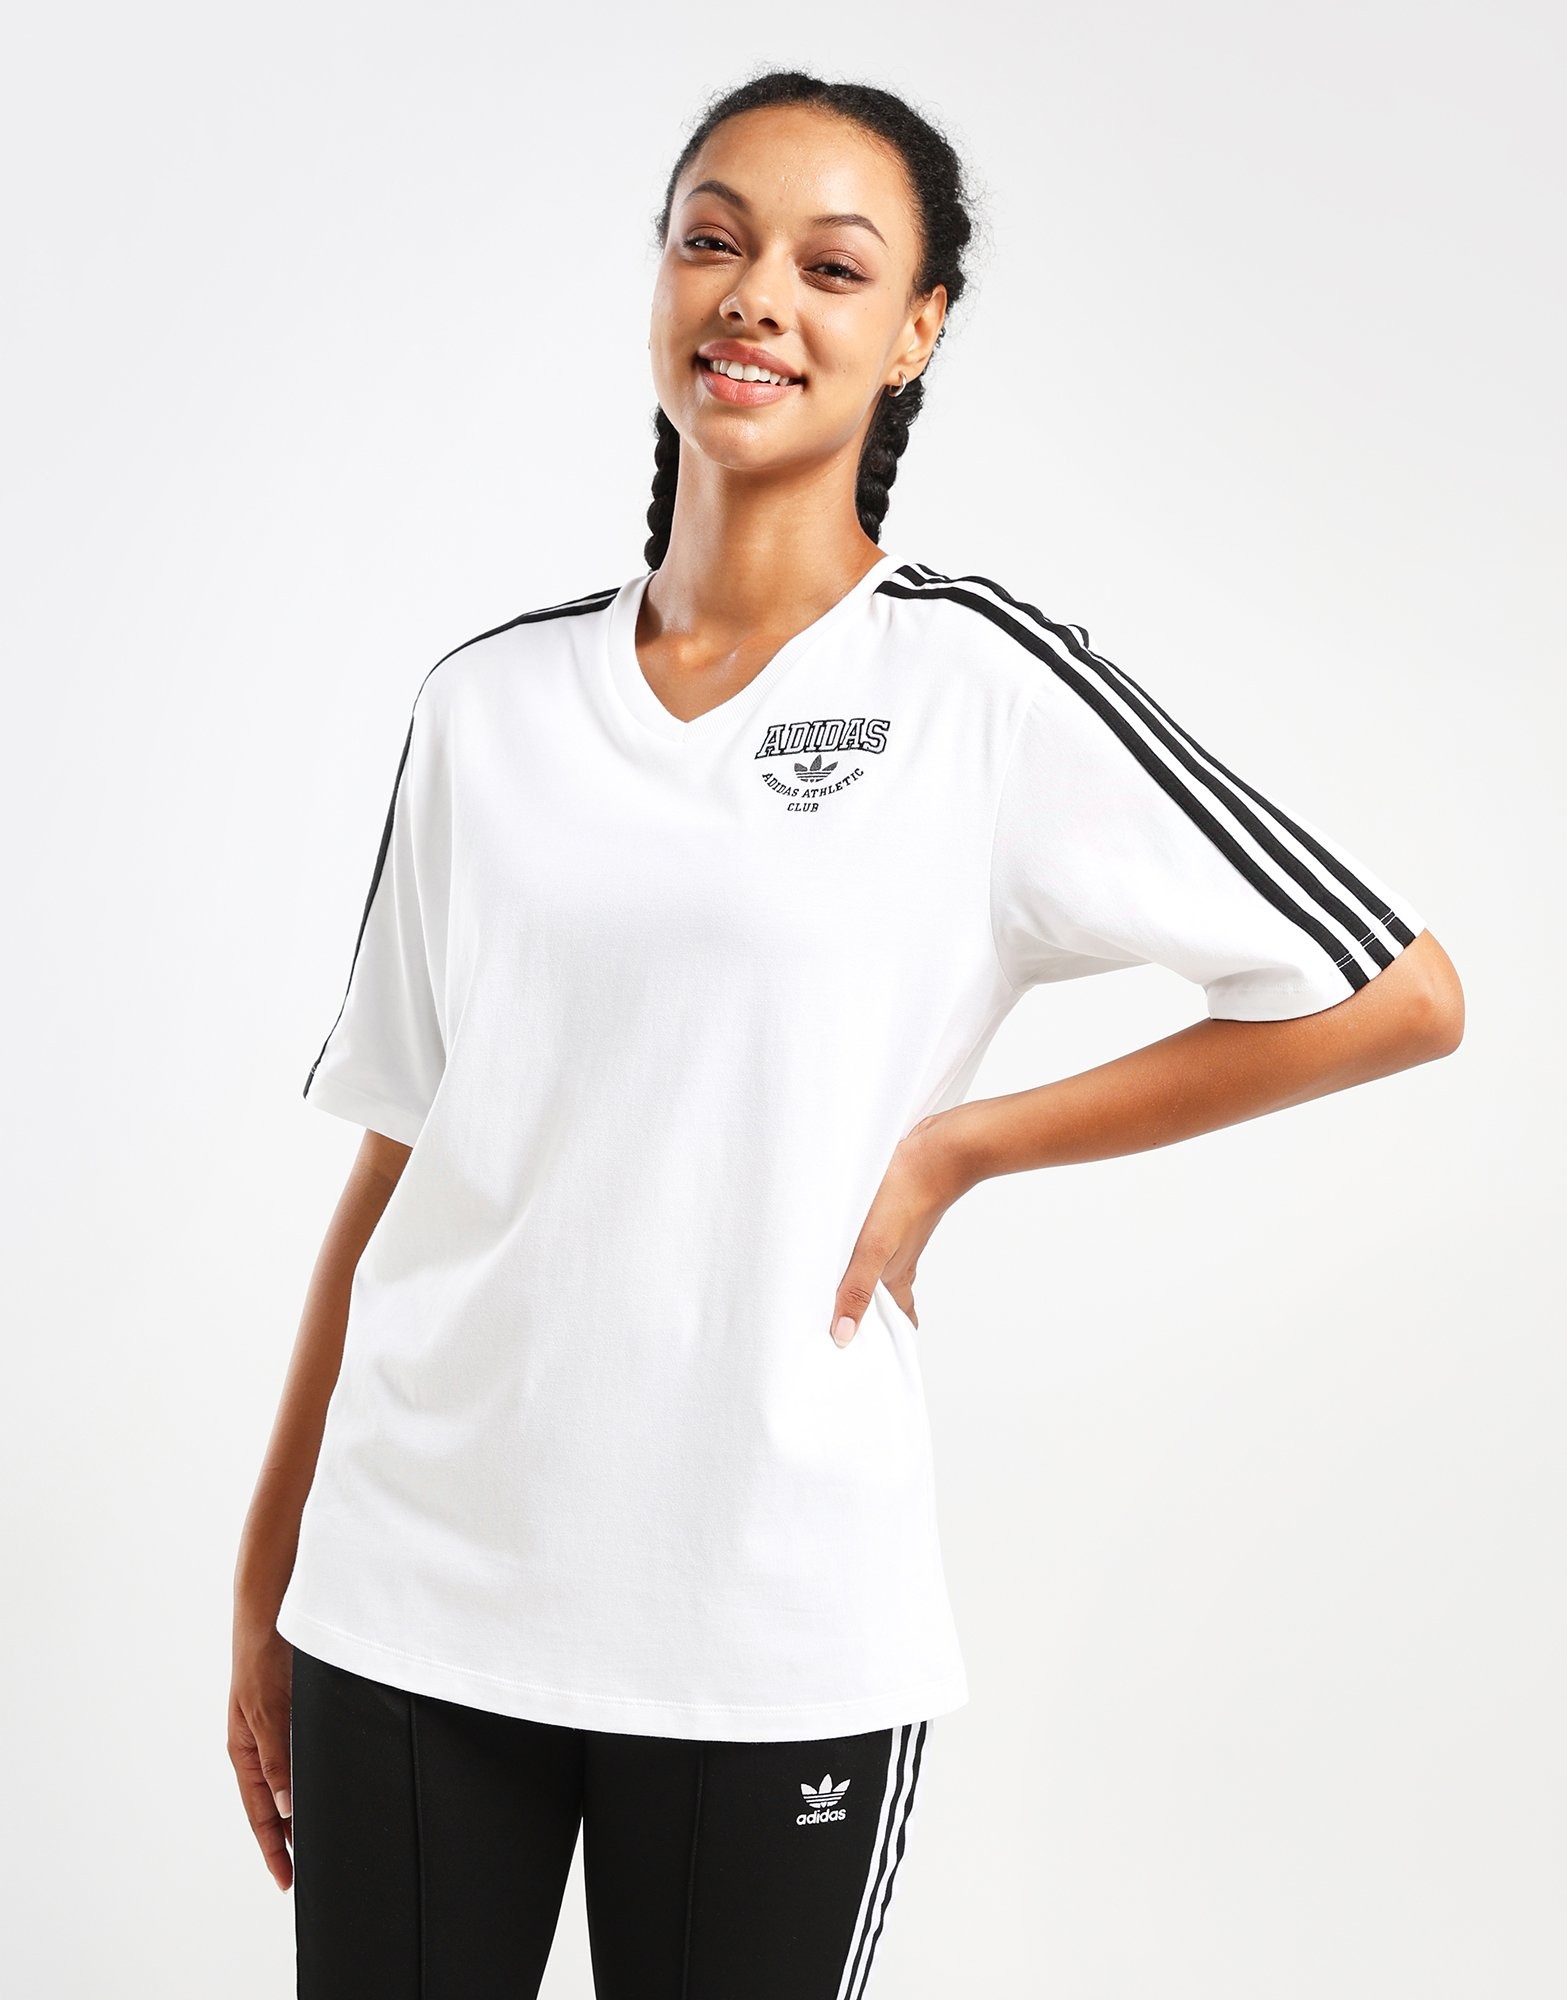 Adidas V-Neck Logo Tee Crew Yellow L-XL - Womens Originals T Shirts